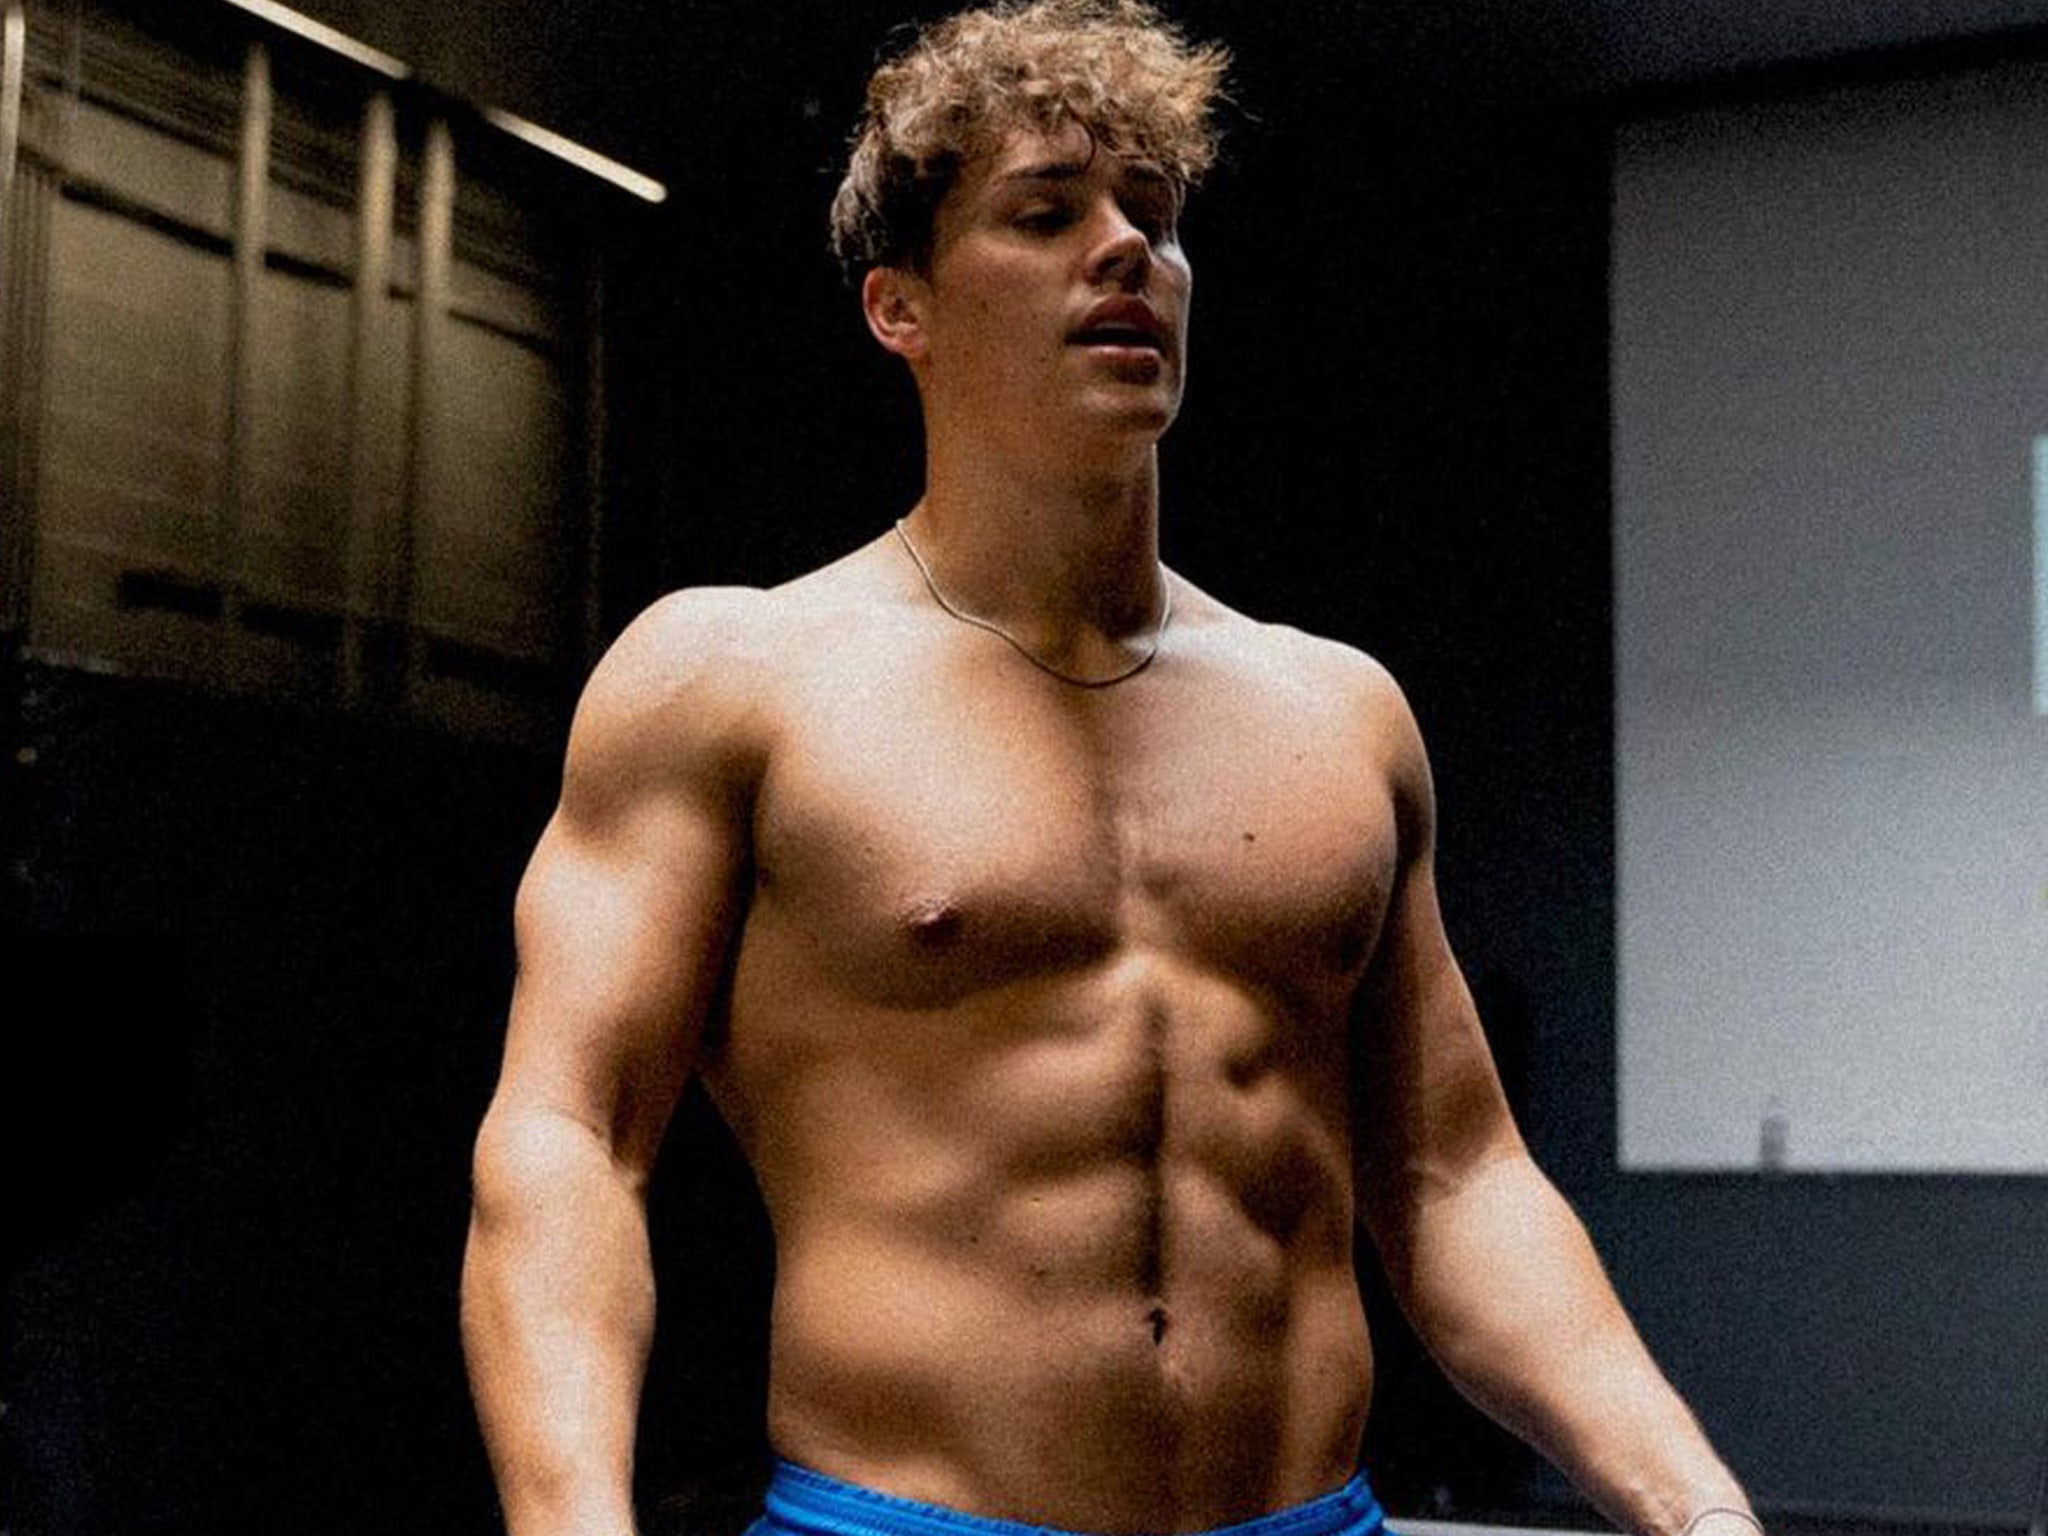 Noah Beck Reposts Underwear Photoshoot on Instagram